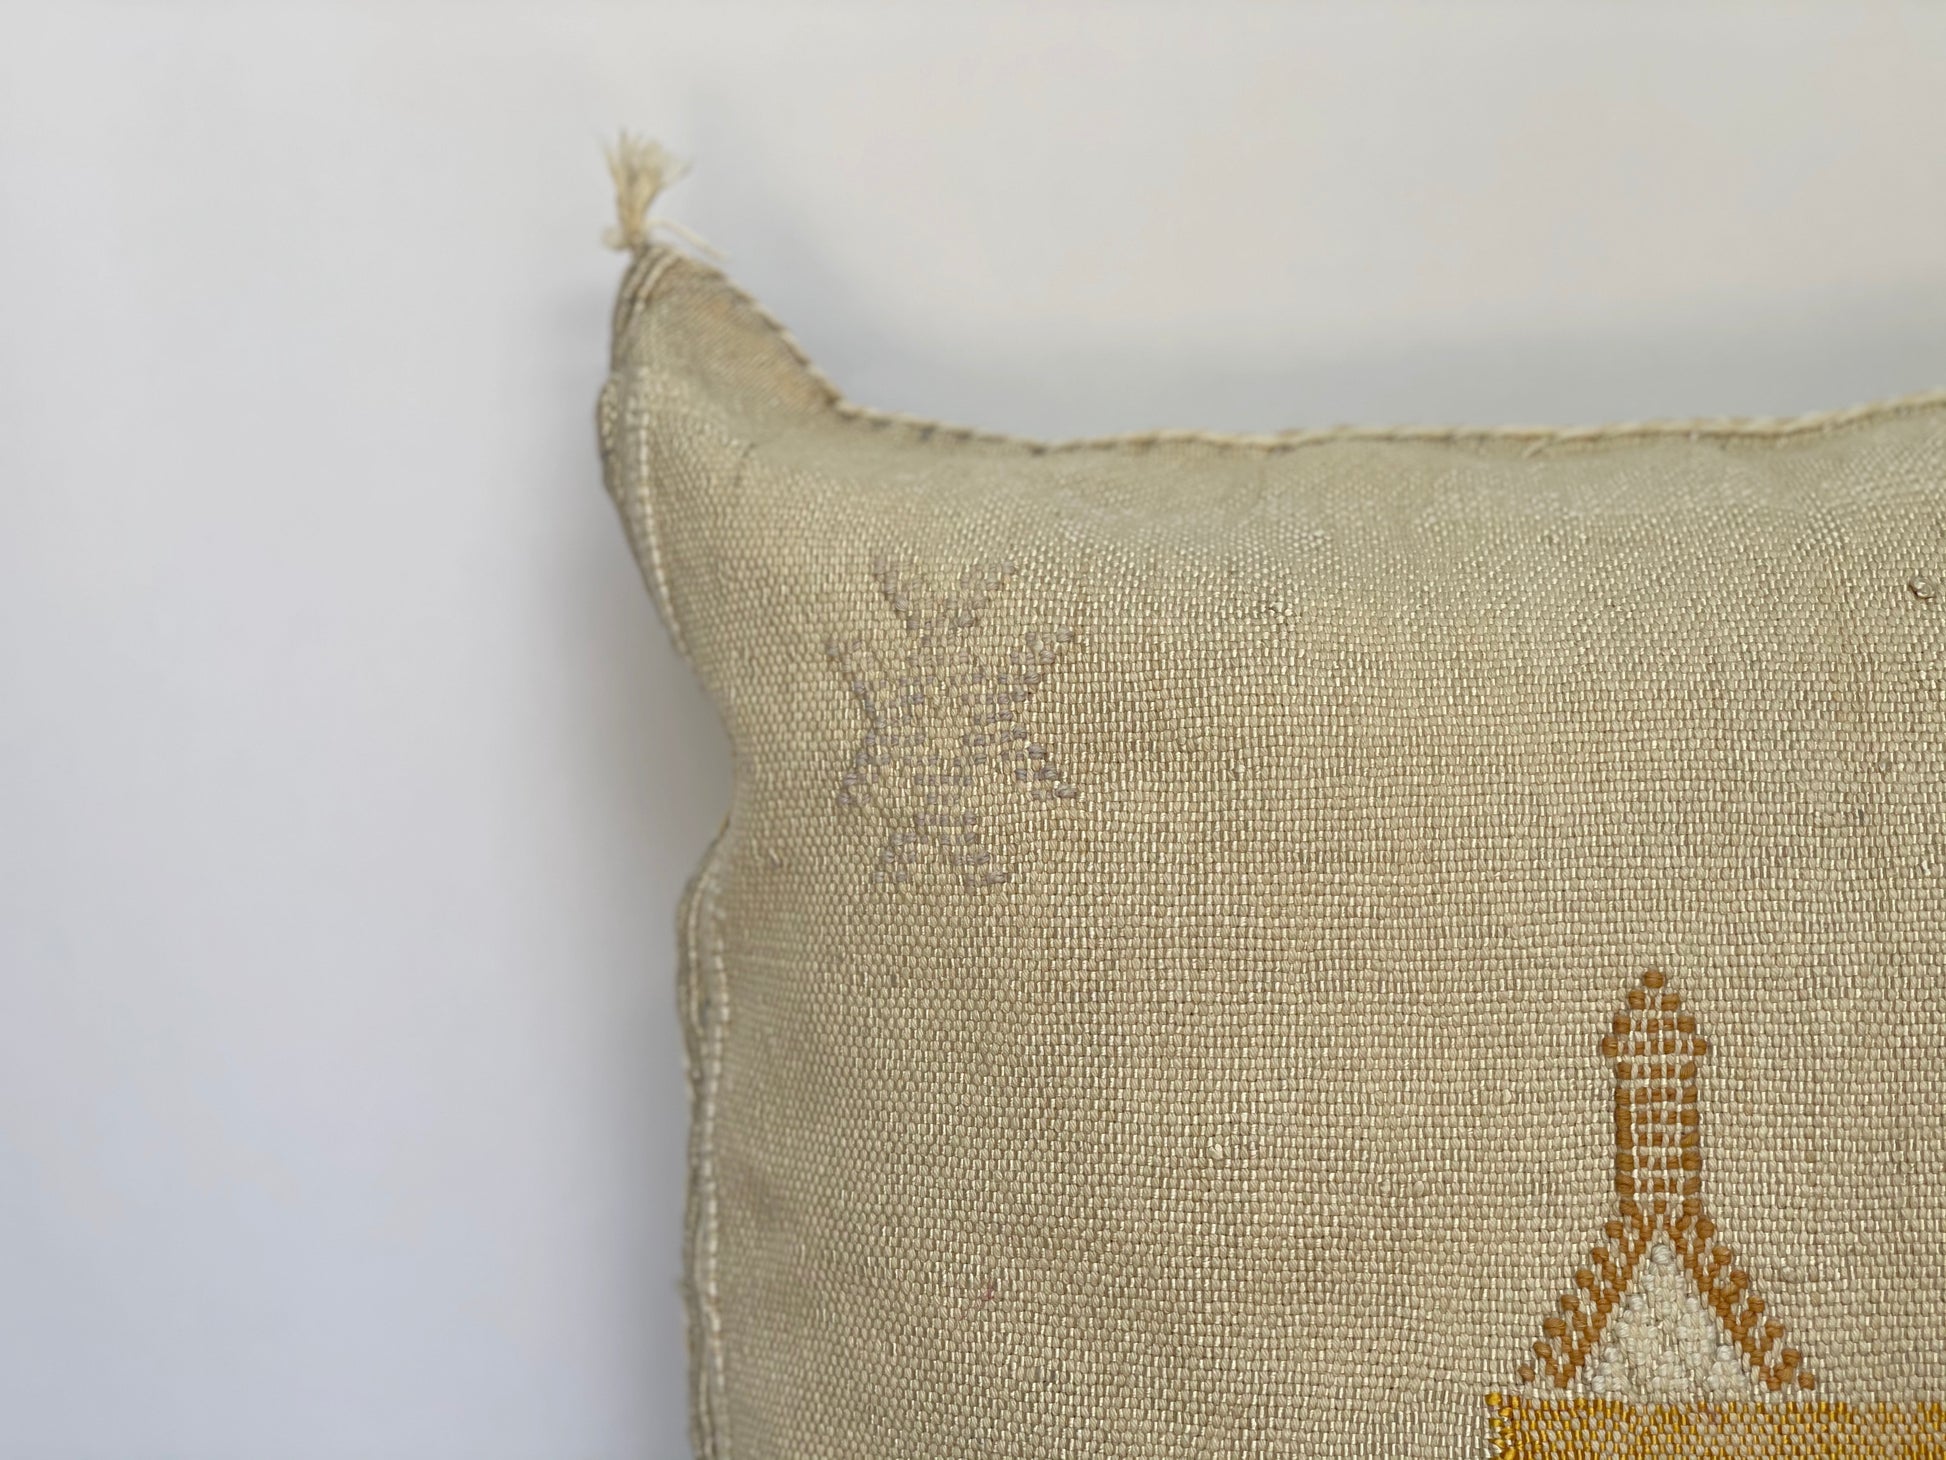 Handmade Vegan Silk Pillow Cover in Beige